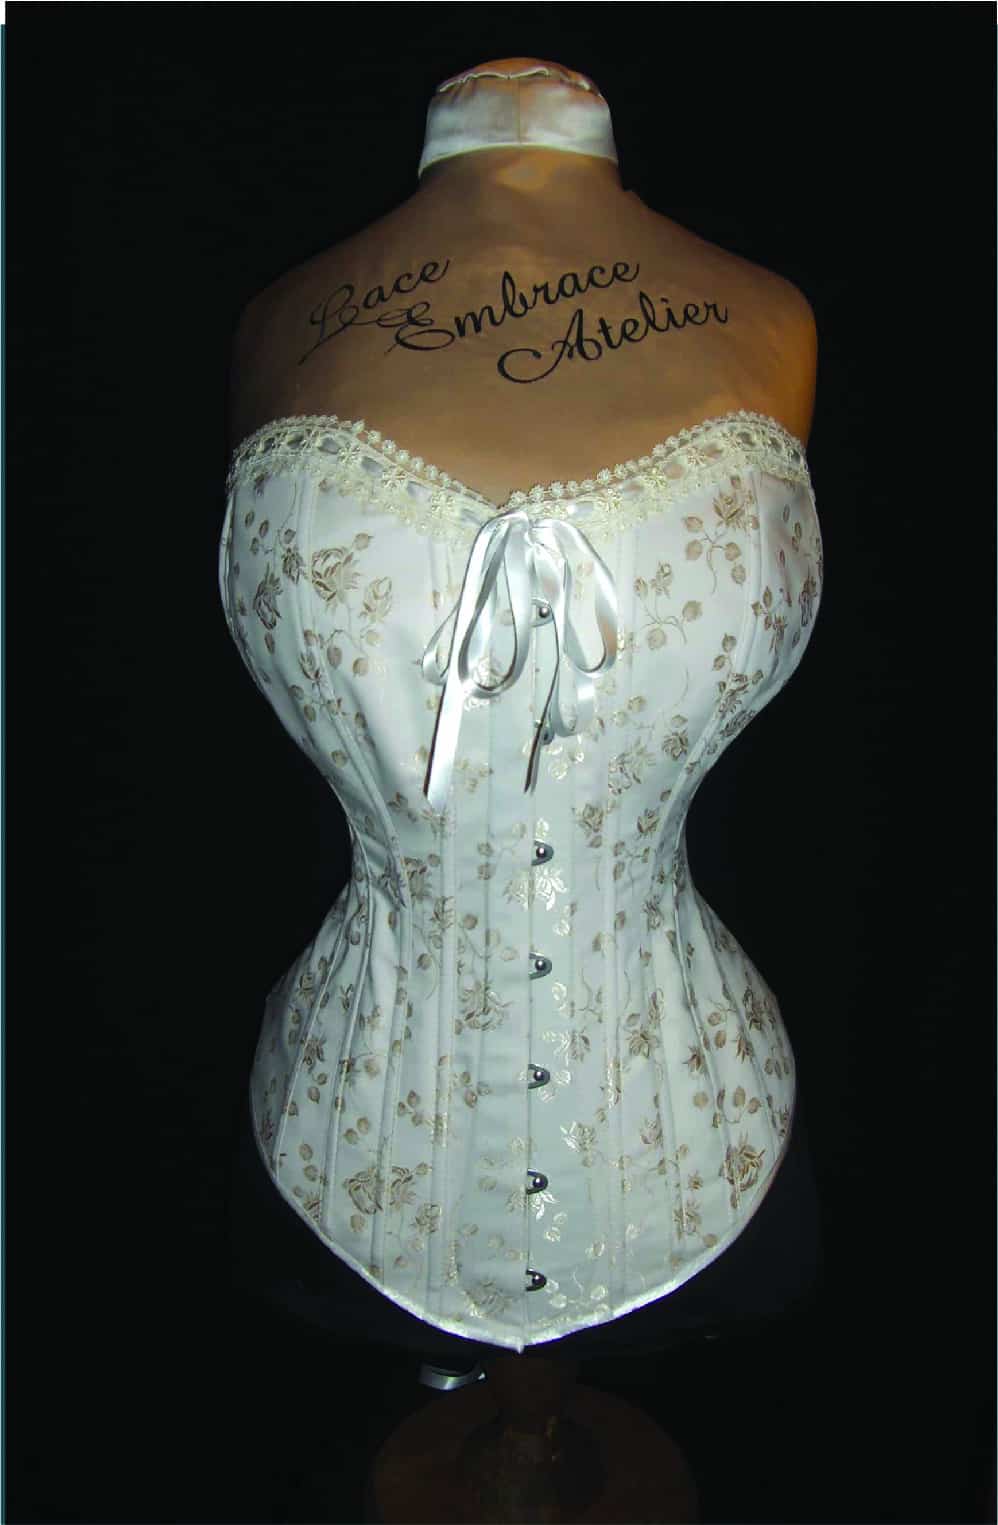 Custom made deposit-All corset types